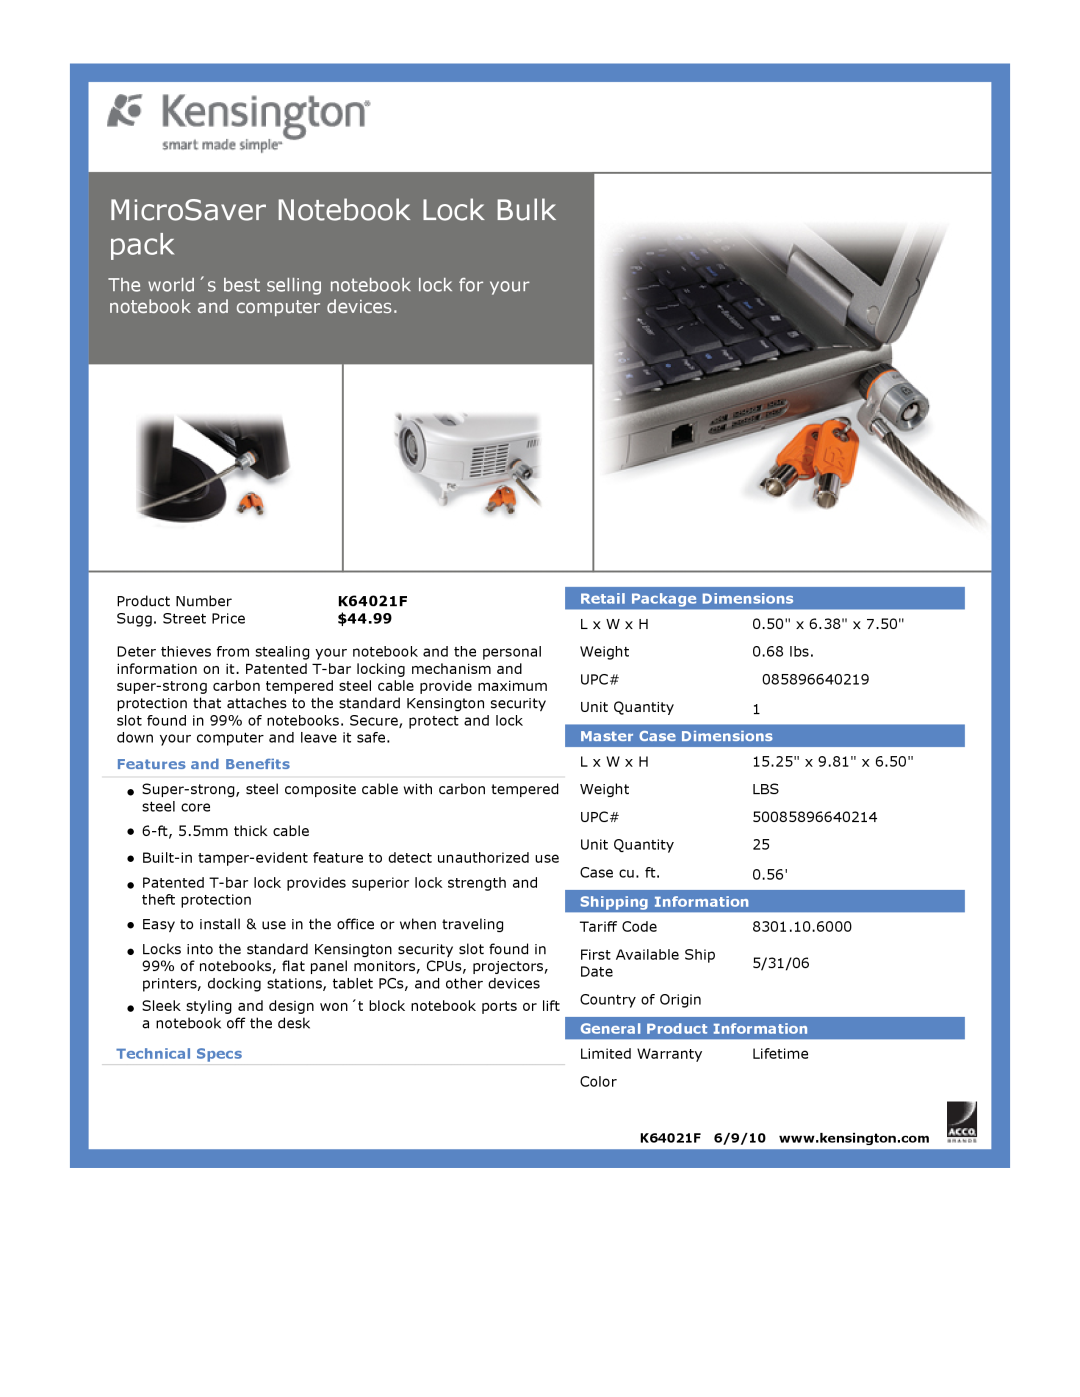 Kensington EU64325 dimensions MicroSaver Notebook Lock Bulk pack, $44.99, Features and Benefits, Technical Specs 